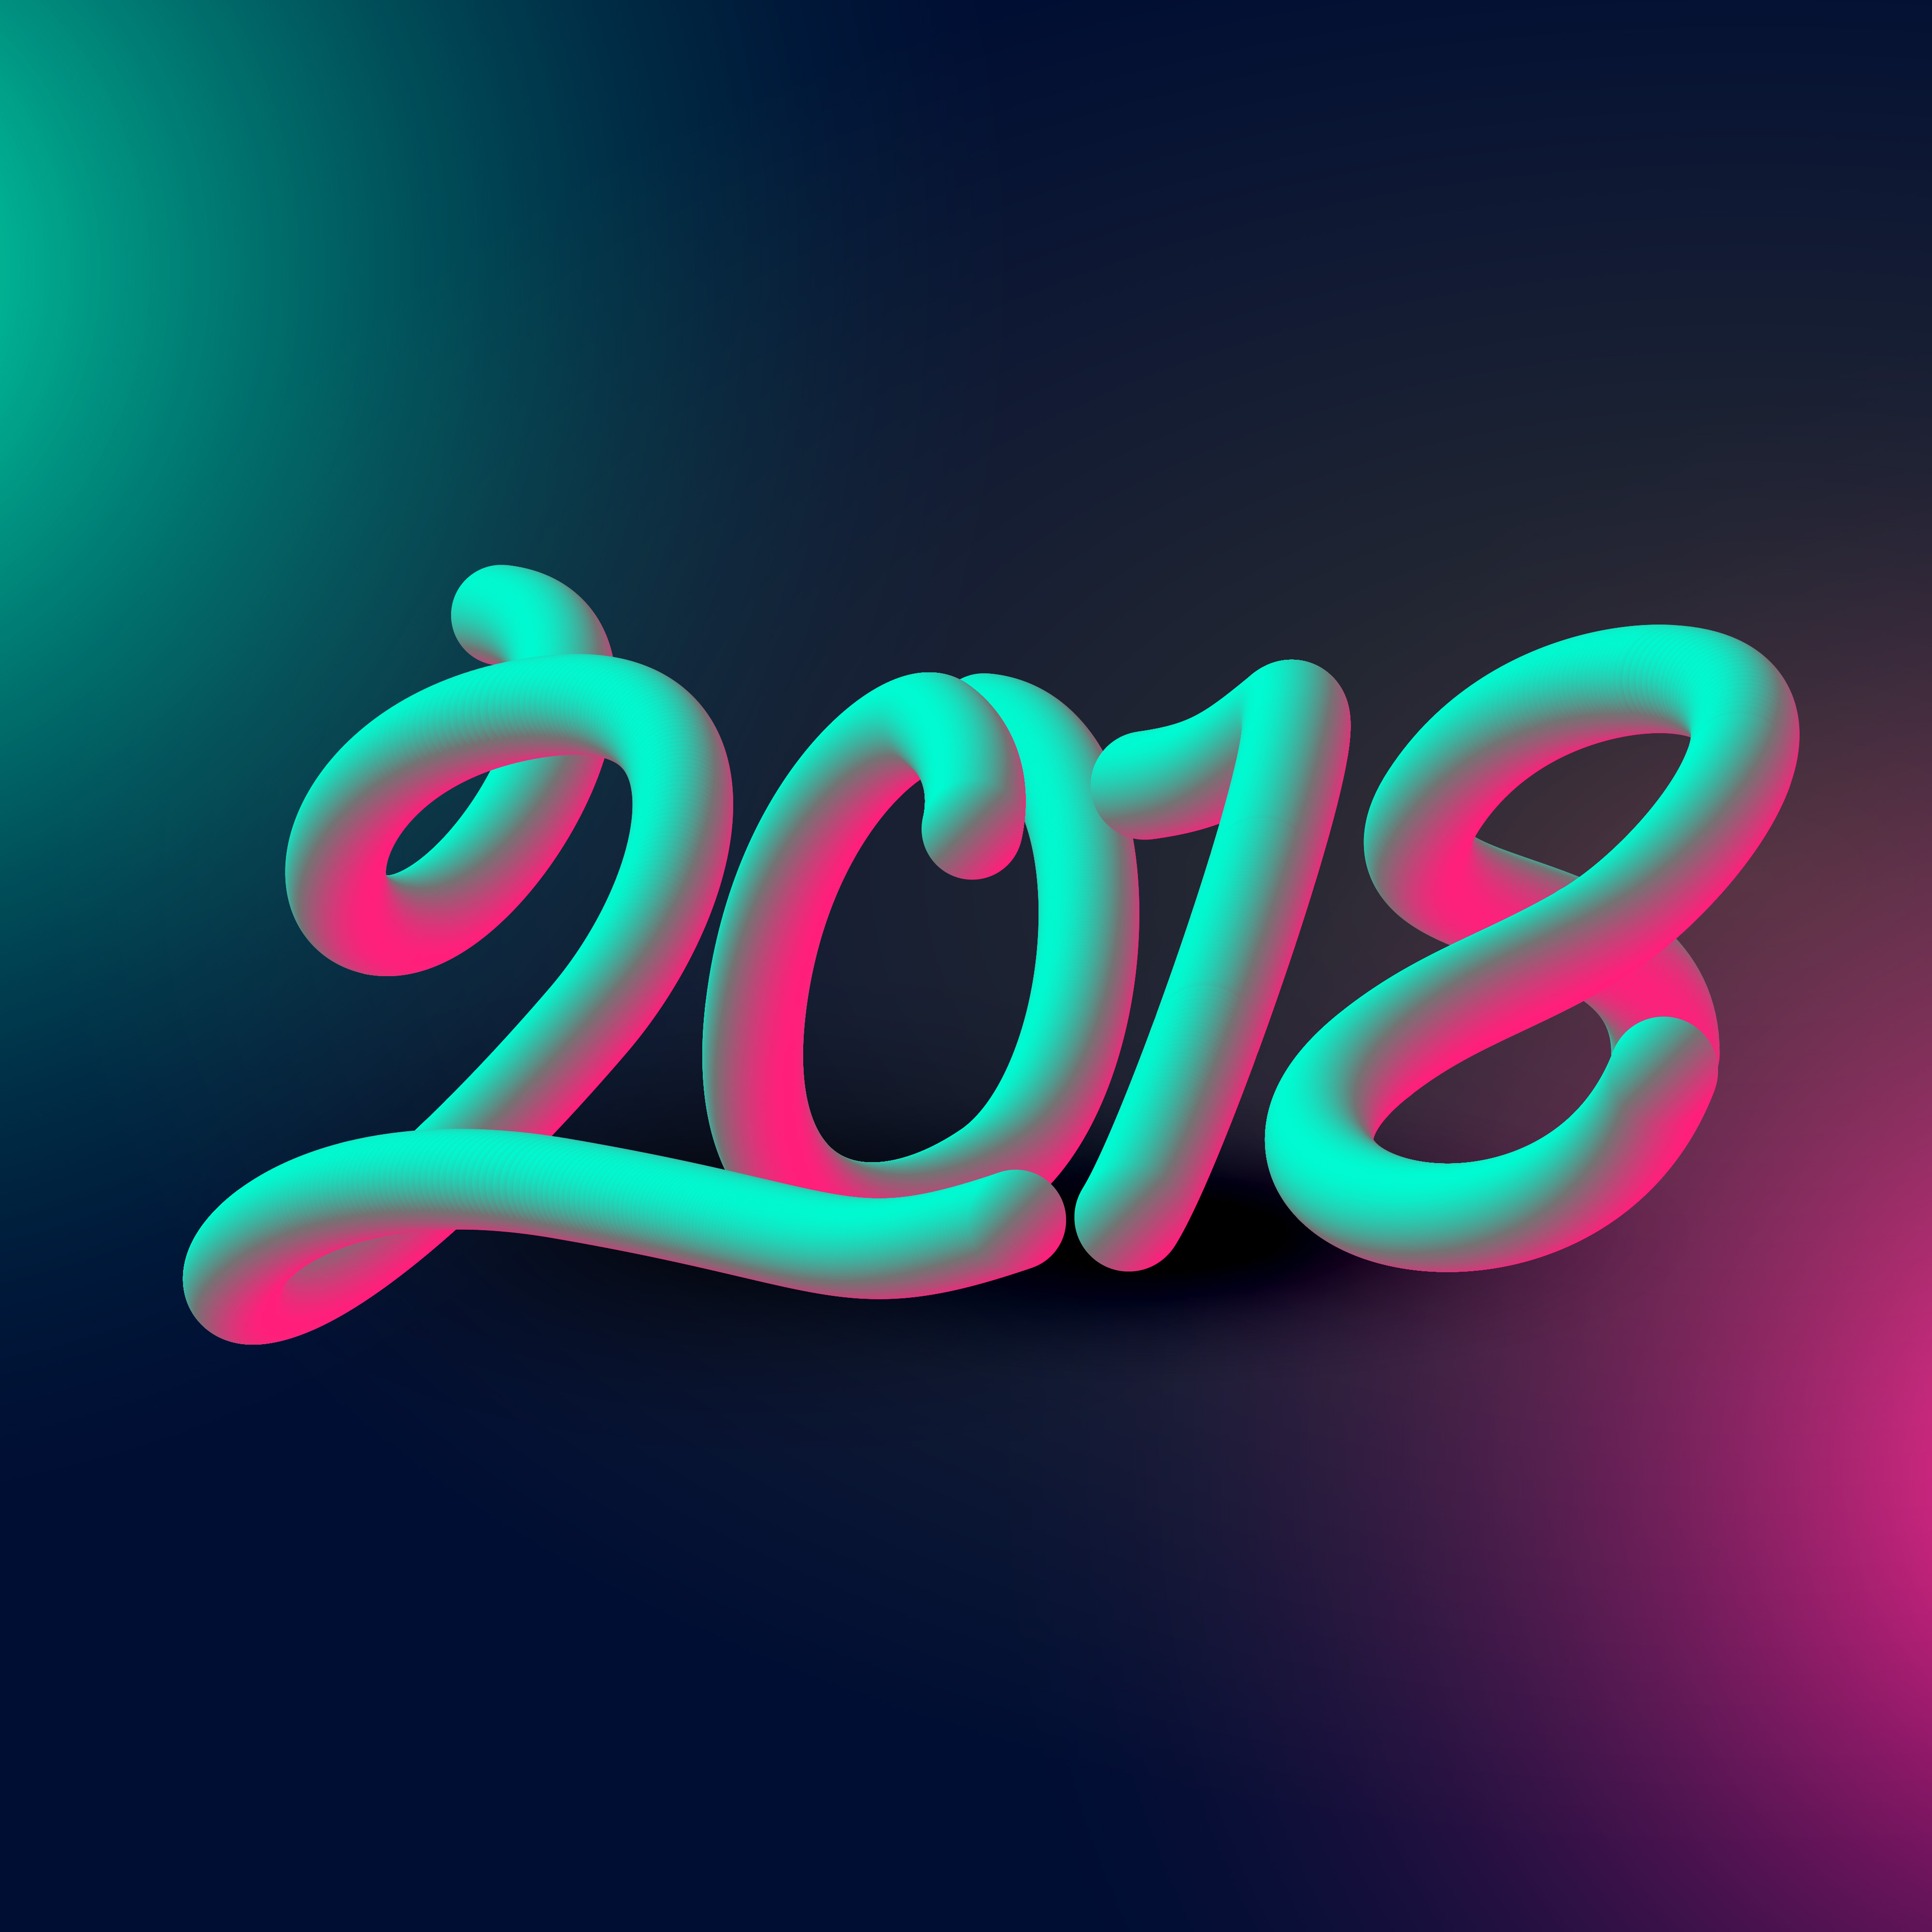 Year: 2018